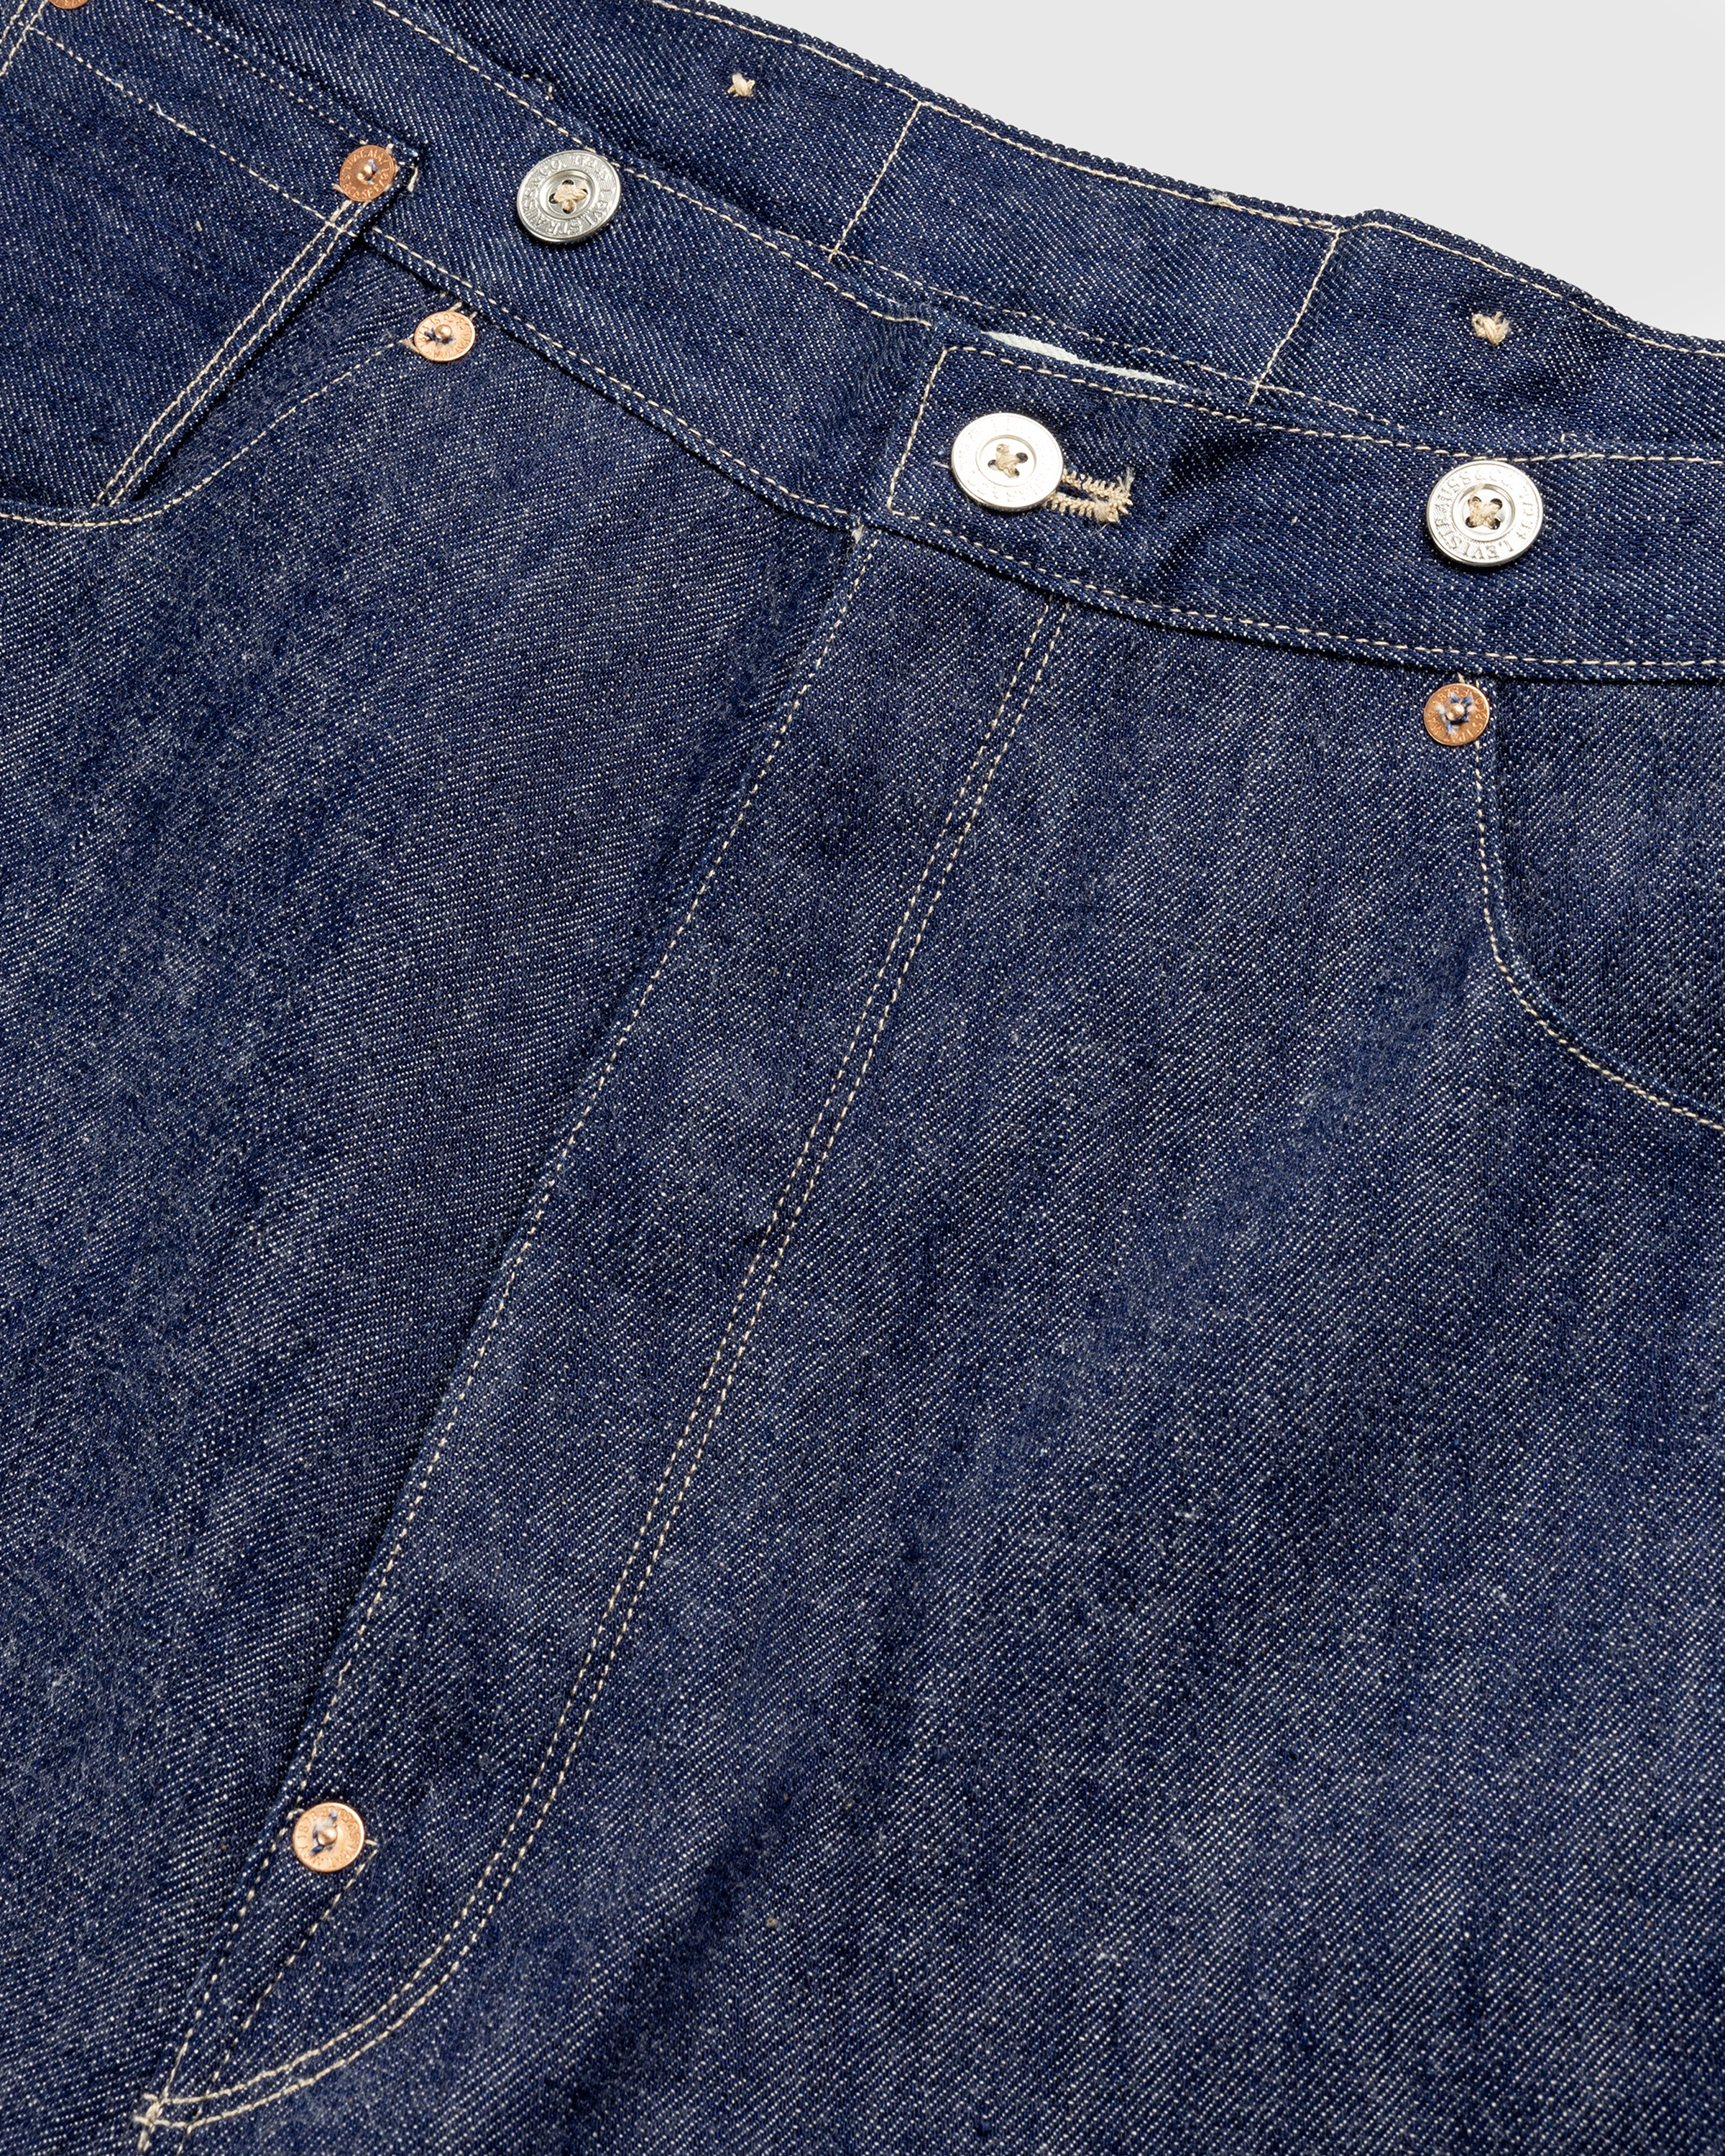 Levi's – LVC 9 Rivet 501 Jeans Blue - Denim - Blue - Image 6